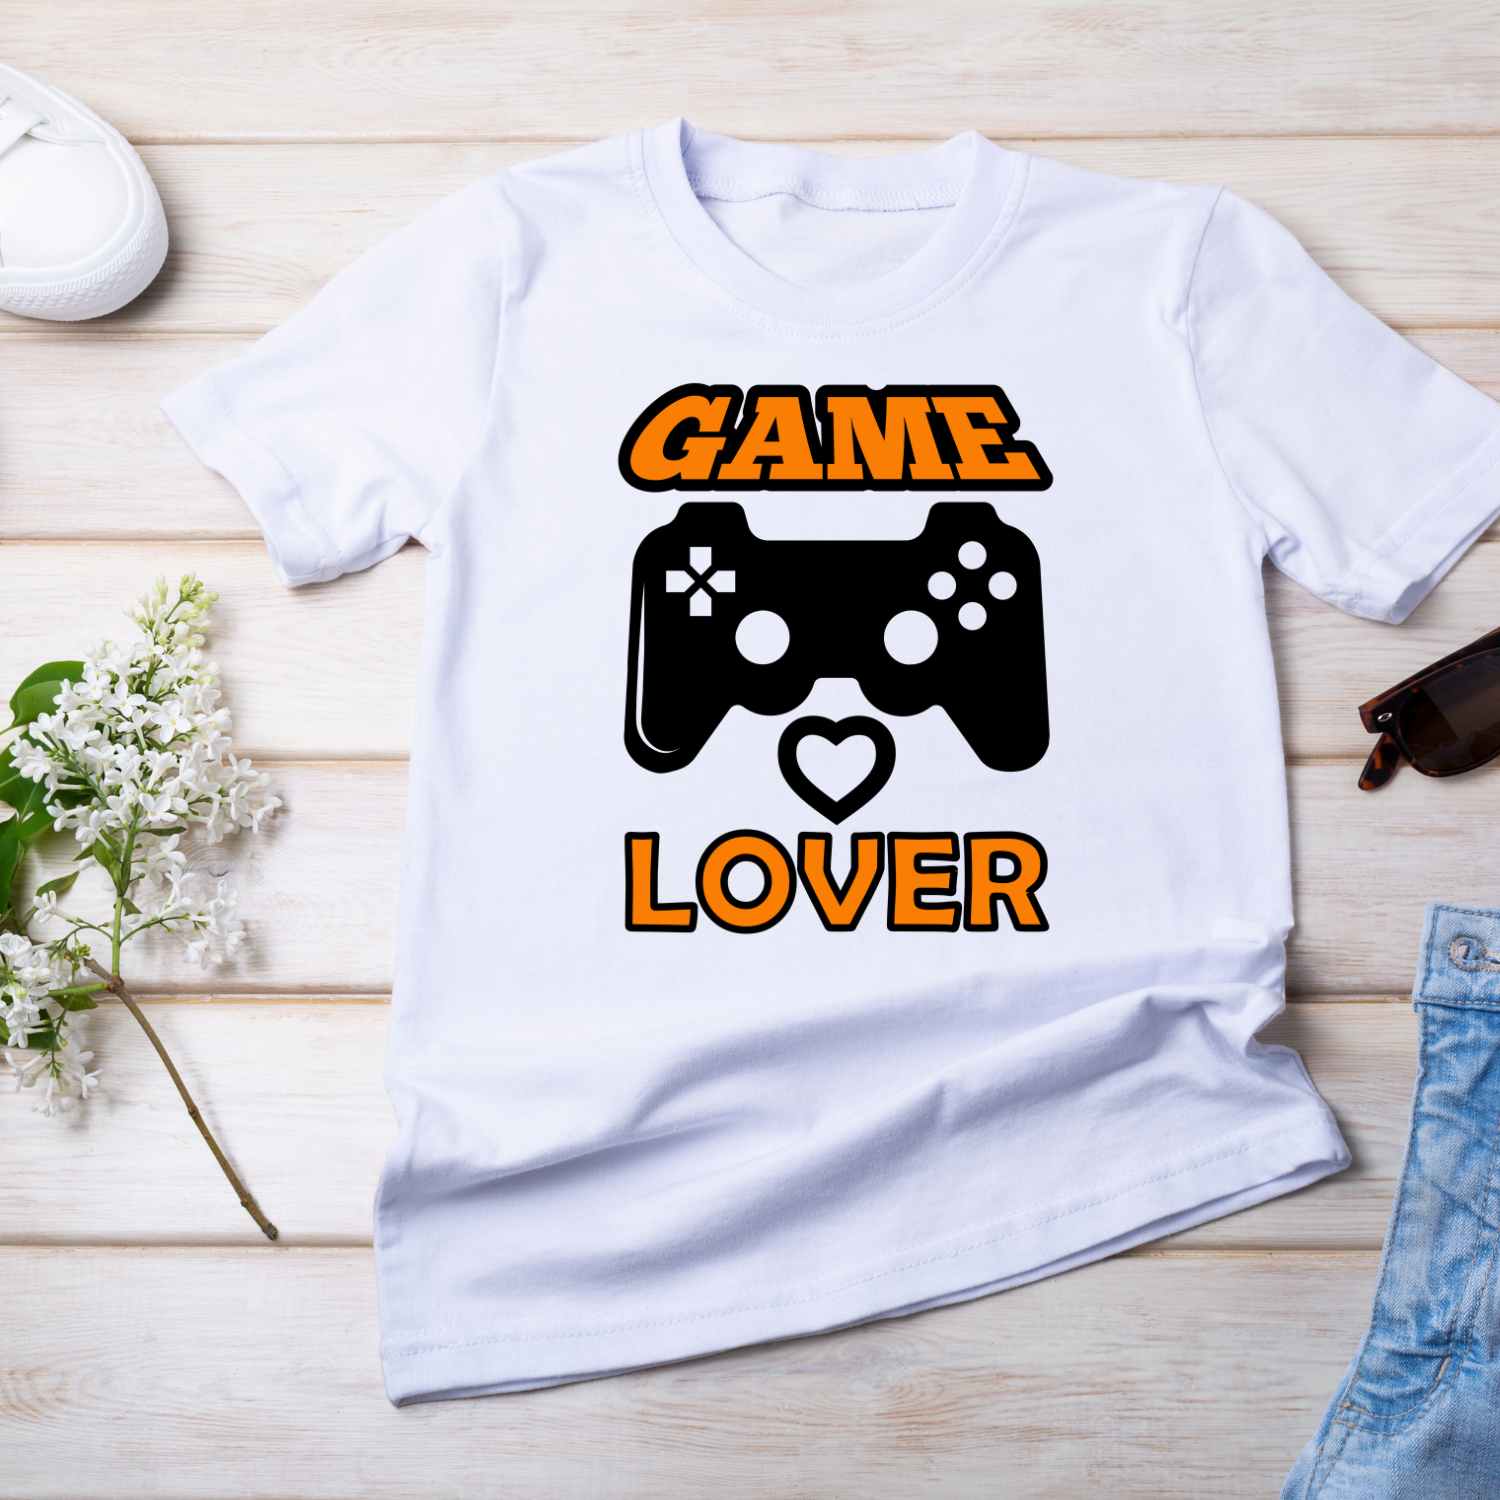 Game lover T-shirt Design